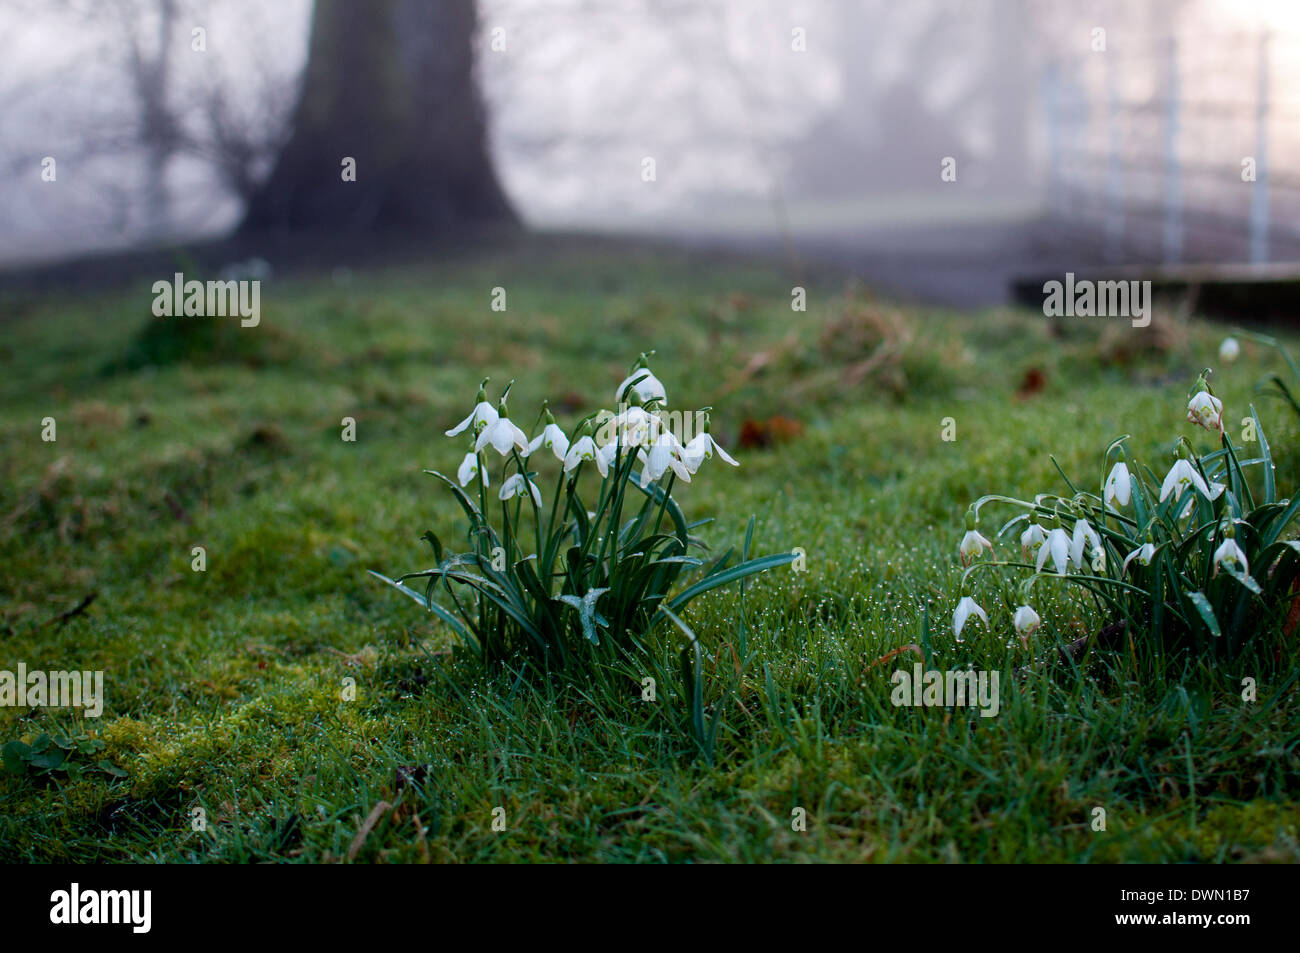 Snowdrops growing in grass, Priory Park, Warwick, Warwickshire, UK Stock Photo